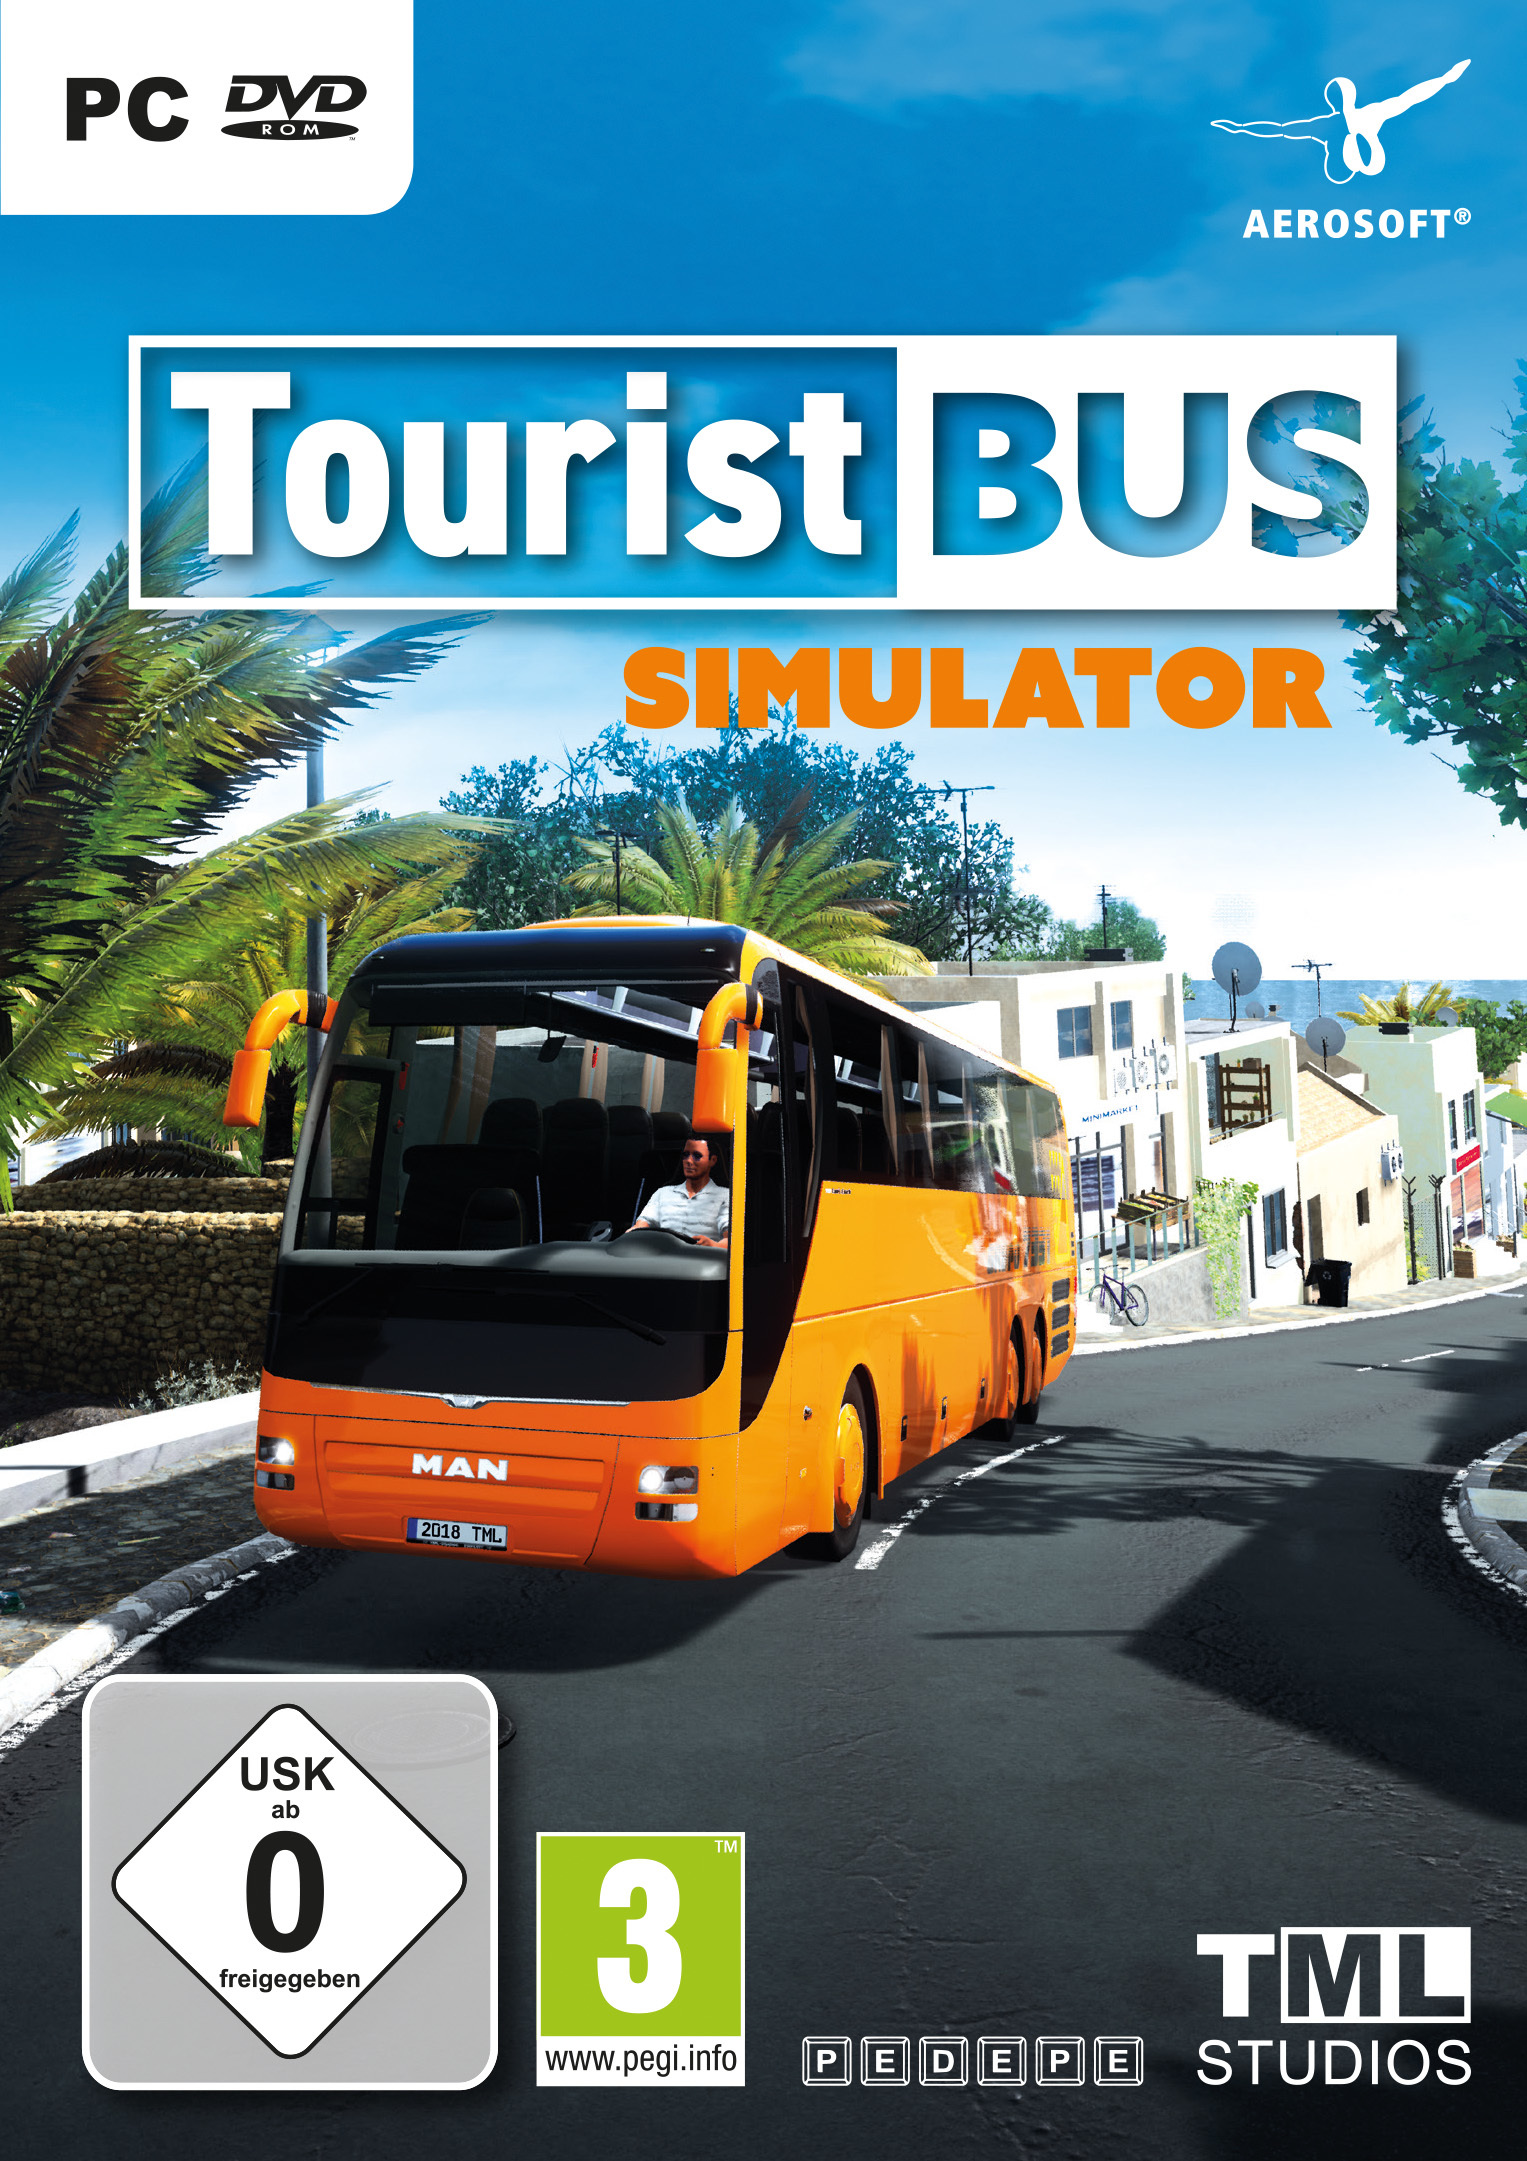 traveller bus simulator